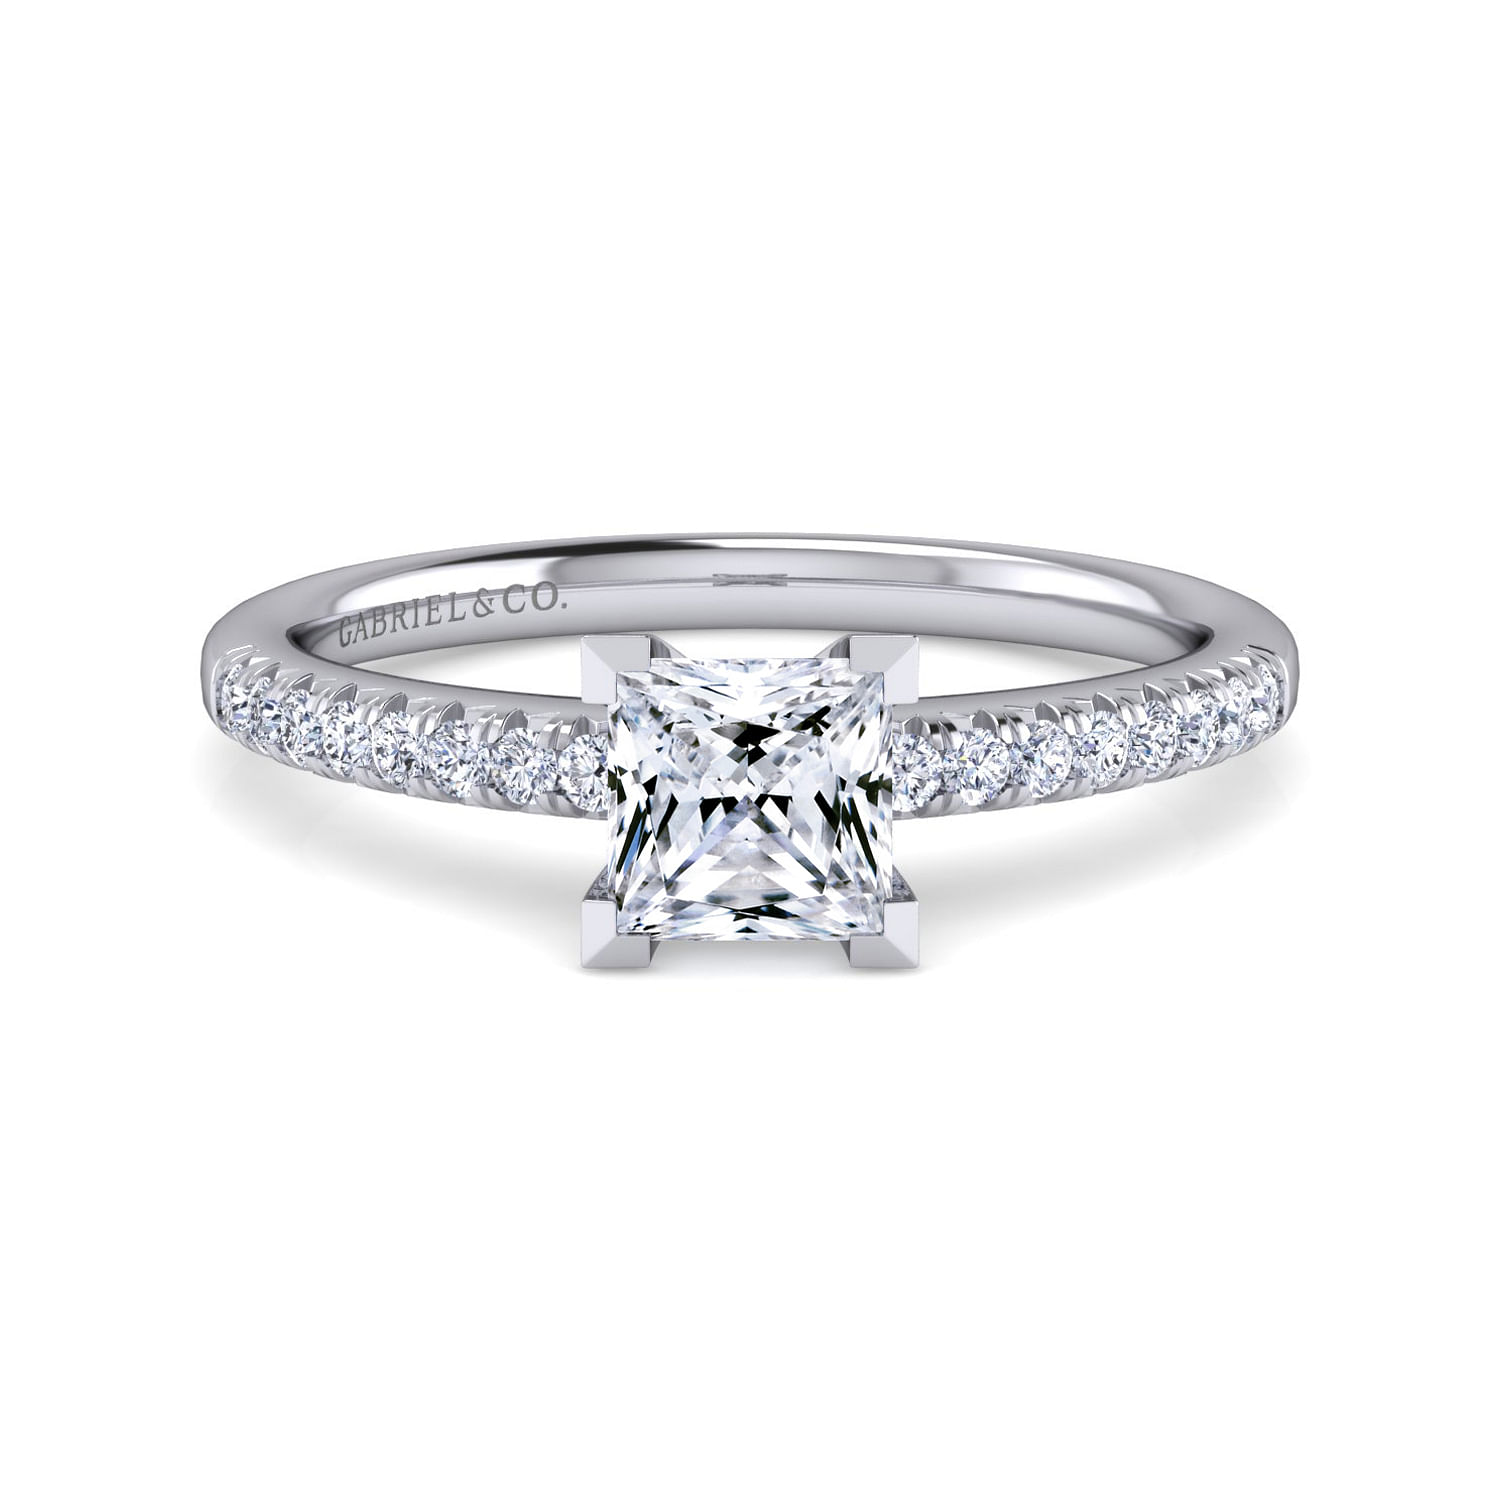 Kelly - 14K White Gold Princess Cut Diamond Engagement Ring